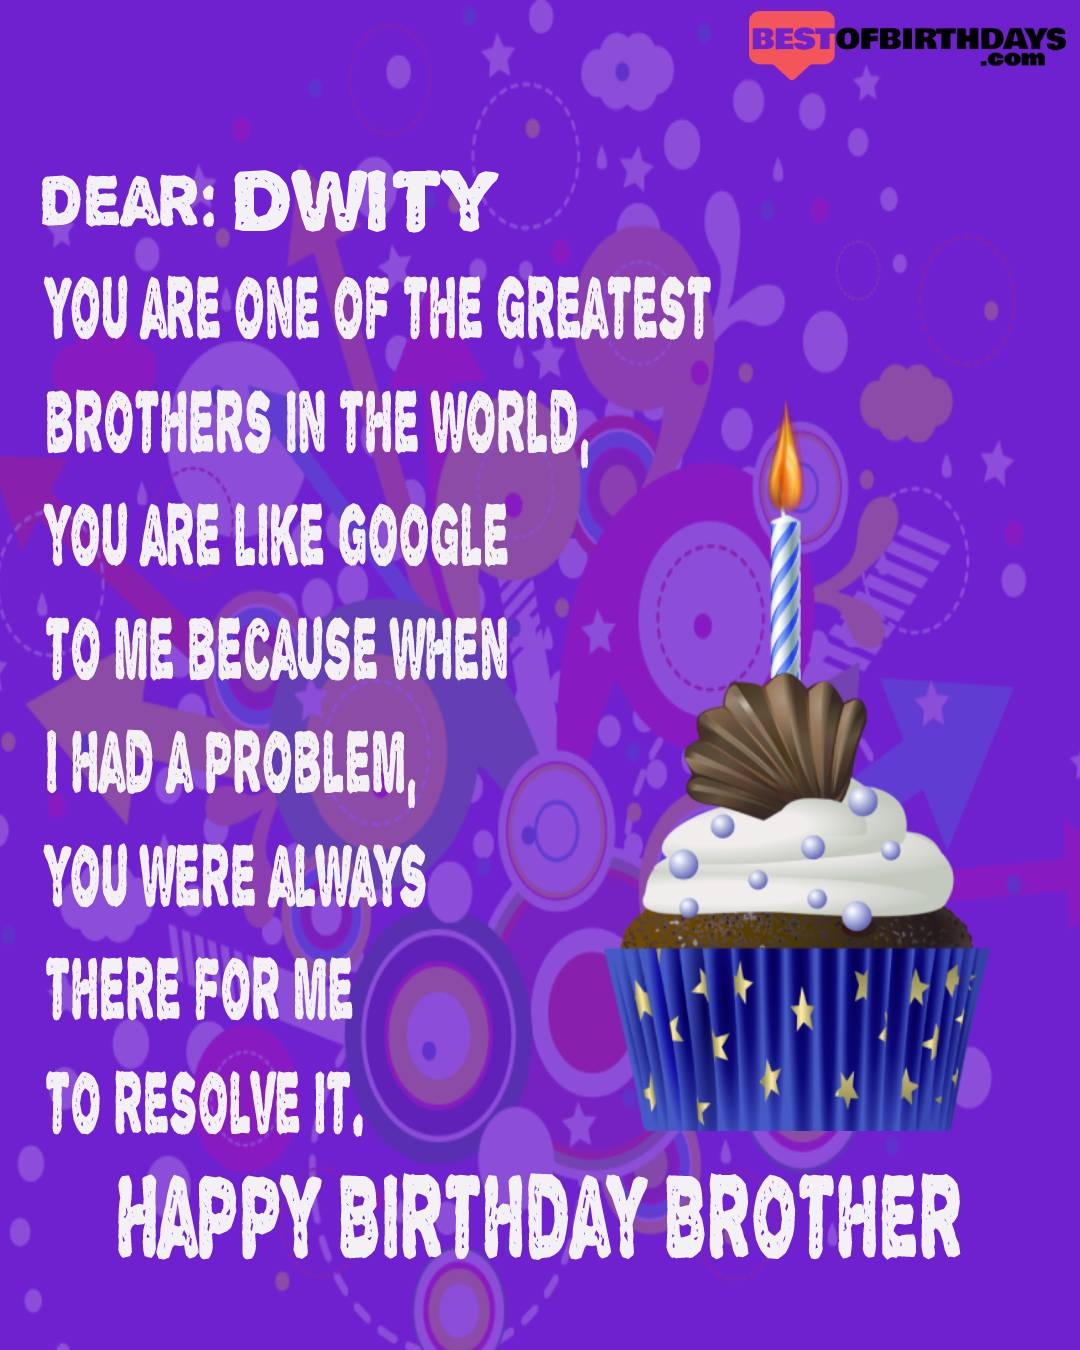 Happy birthday dwity bhai brother bro